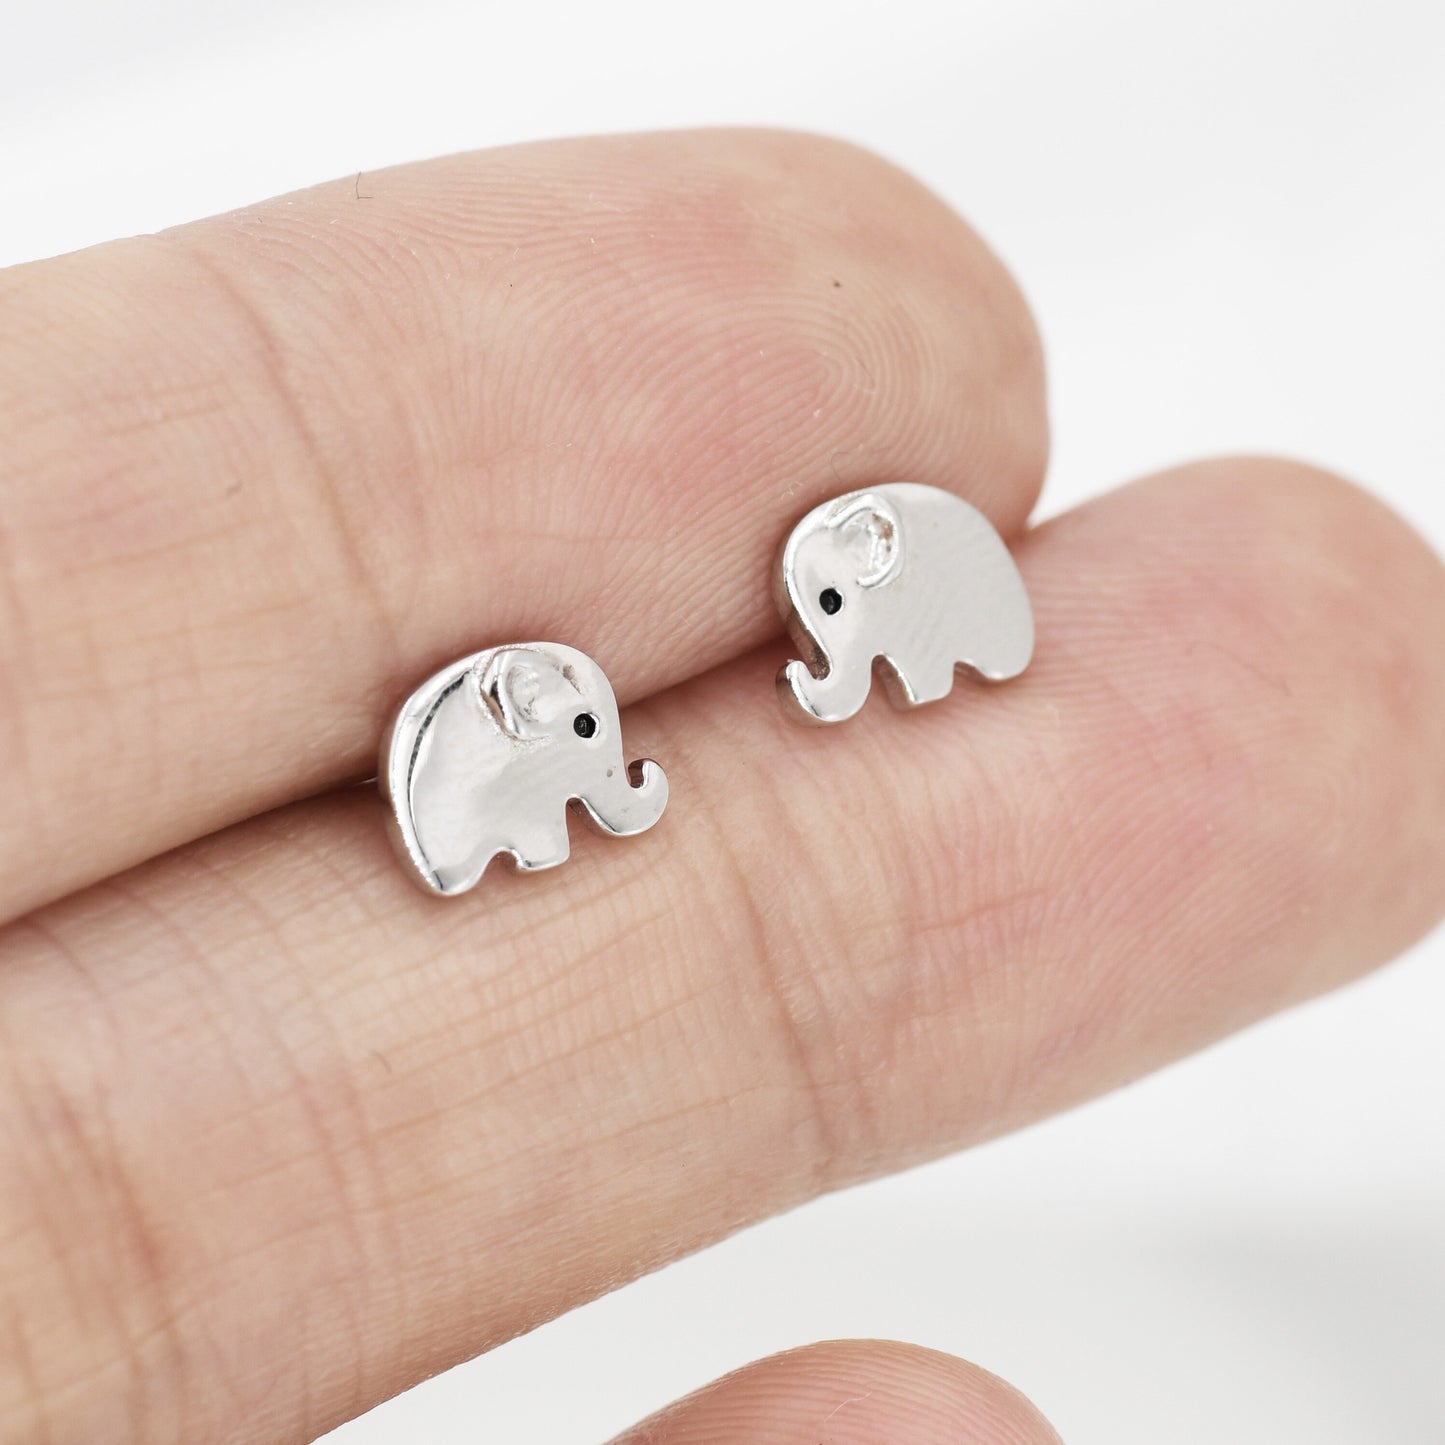 Cute Baby Elephant Stud Earrings in Sterling Silver, Tiny Elephant Earrings, Nature Inspired Animal Earrings